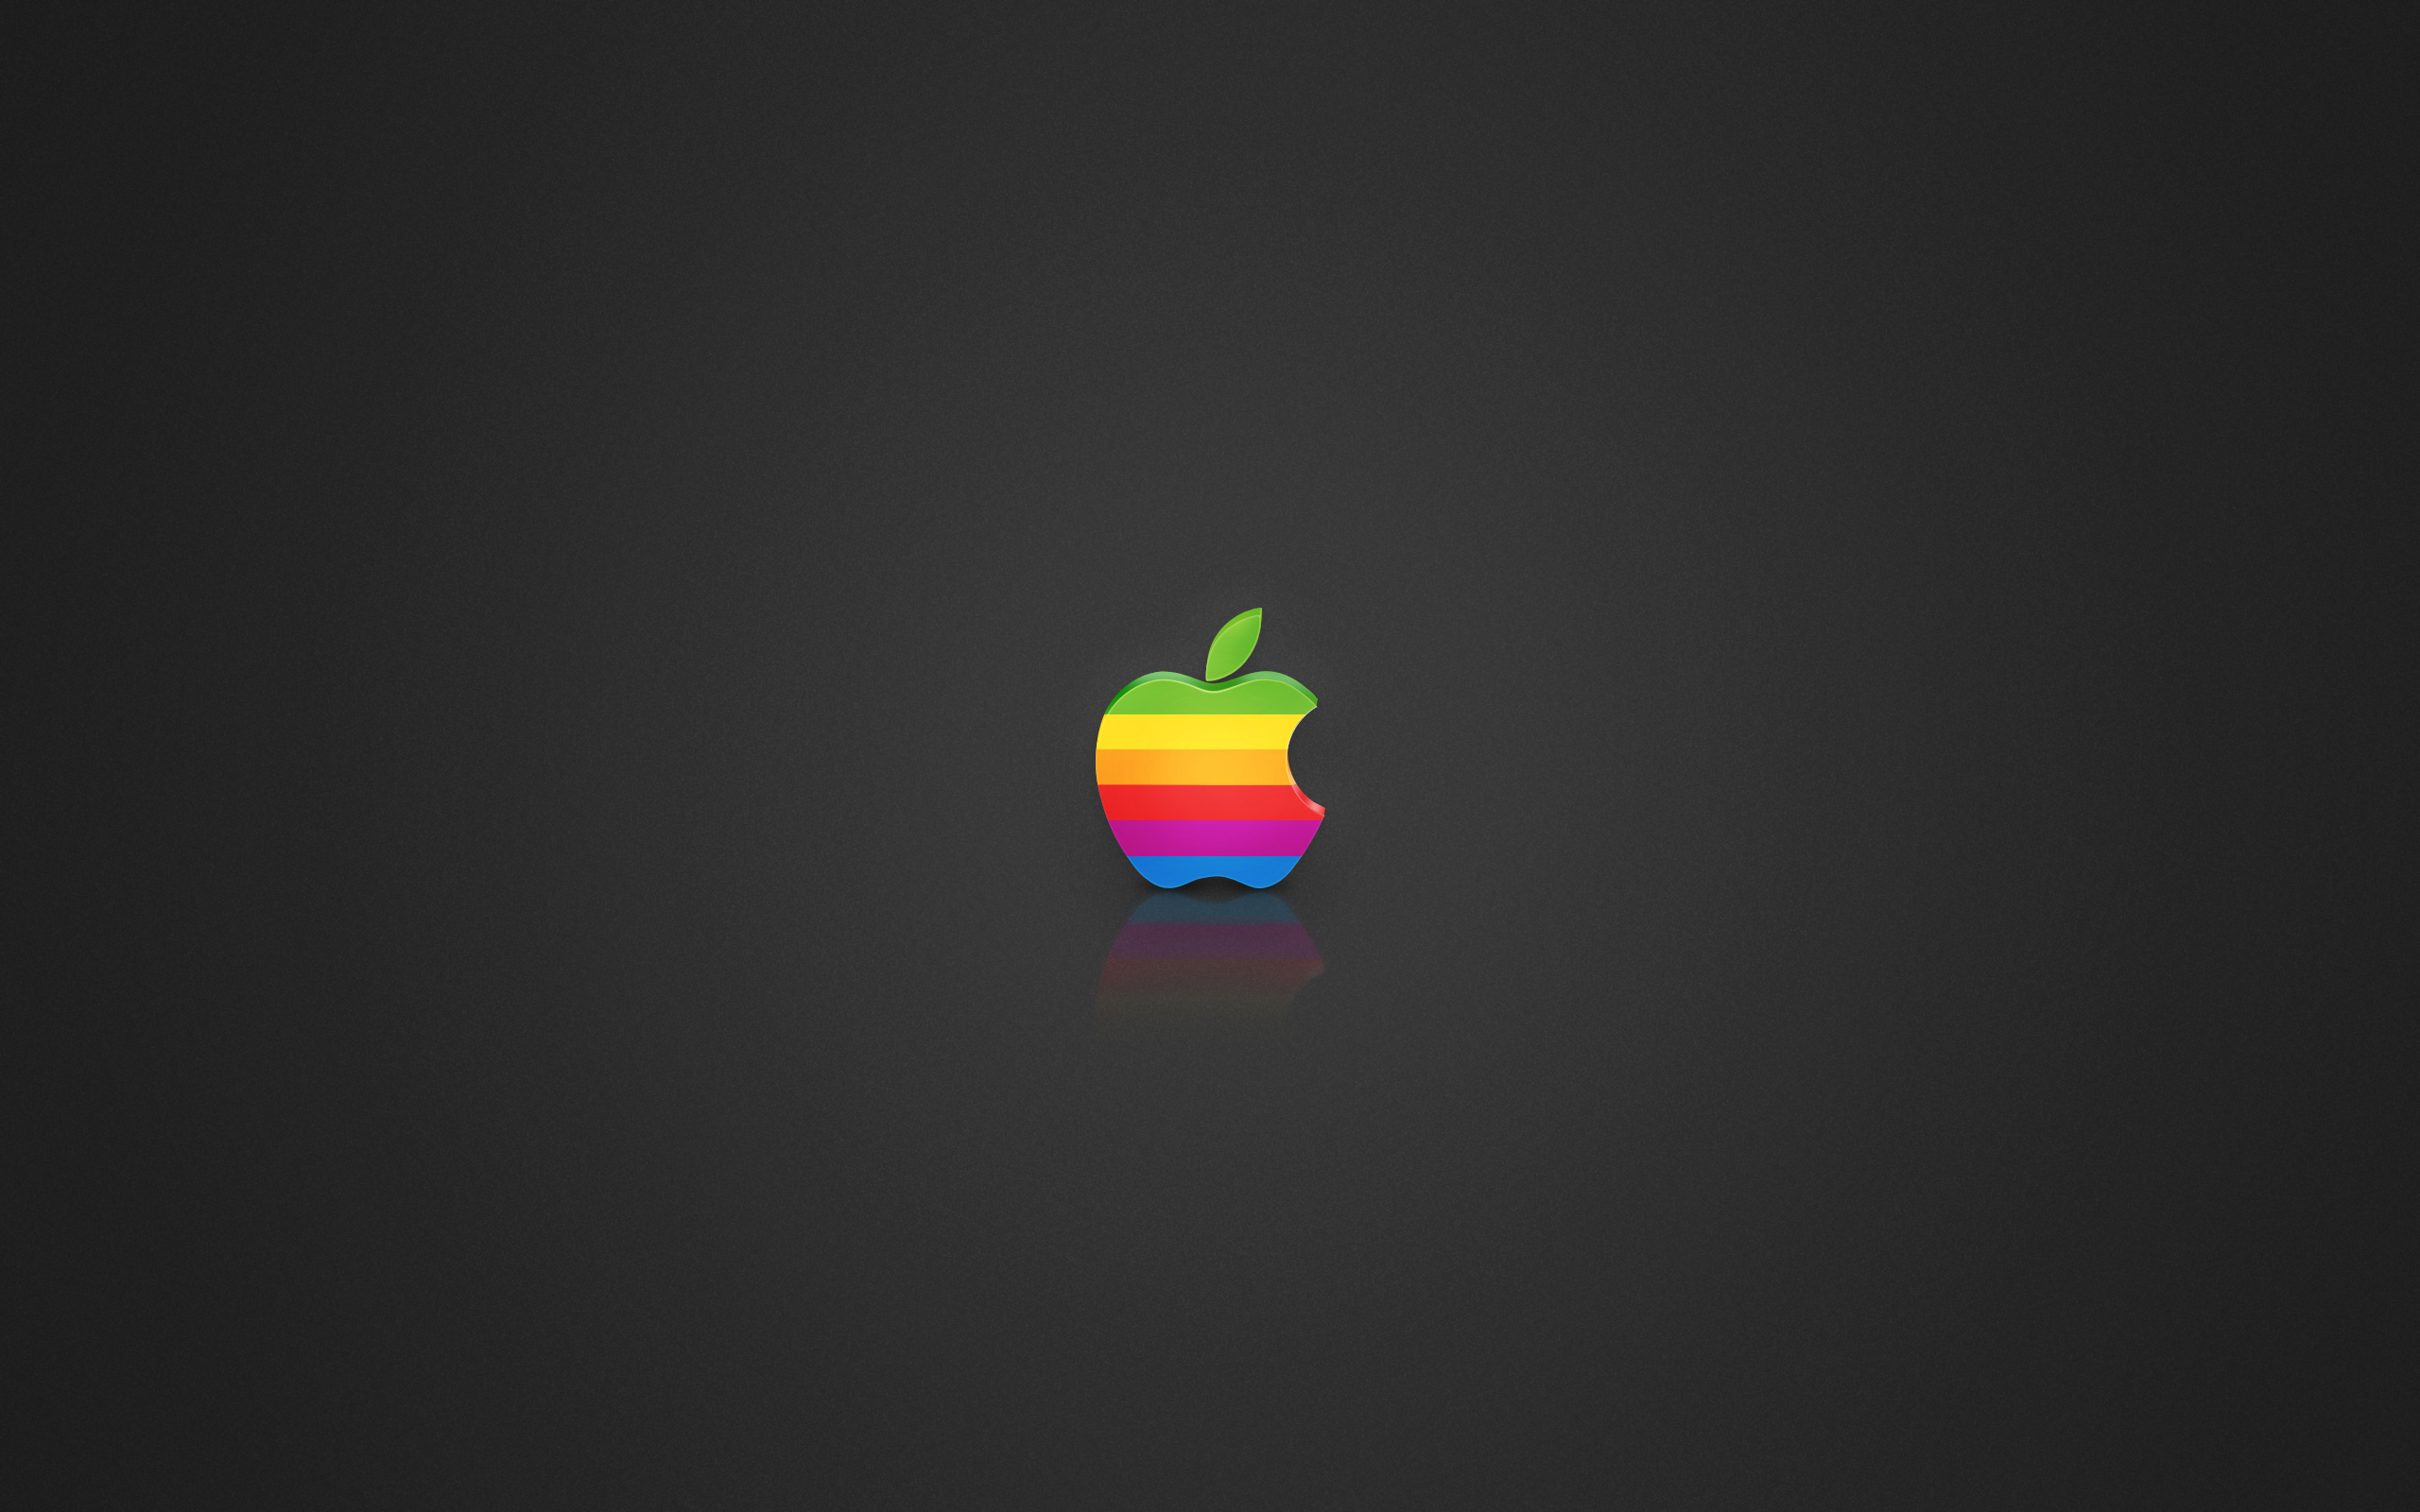 Original Apple Logo Wallpaper Image Amp Pictures Becuo